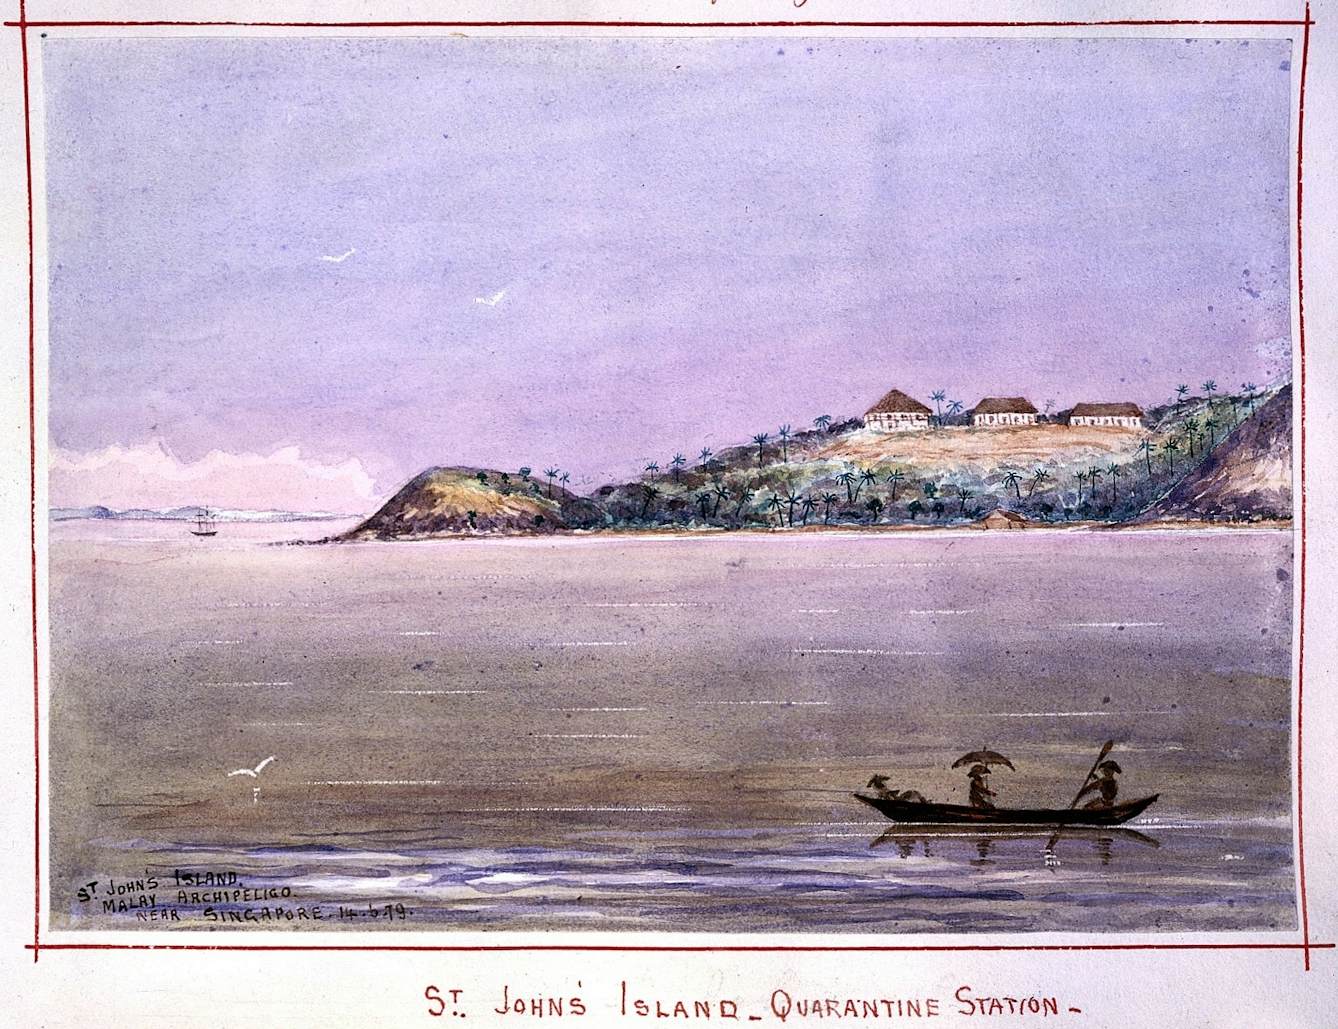 The quarantine station on St John’s Island, Malaysia, John Edmund Taylor, 1879